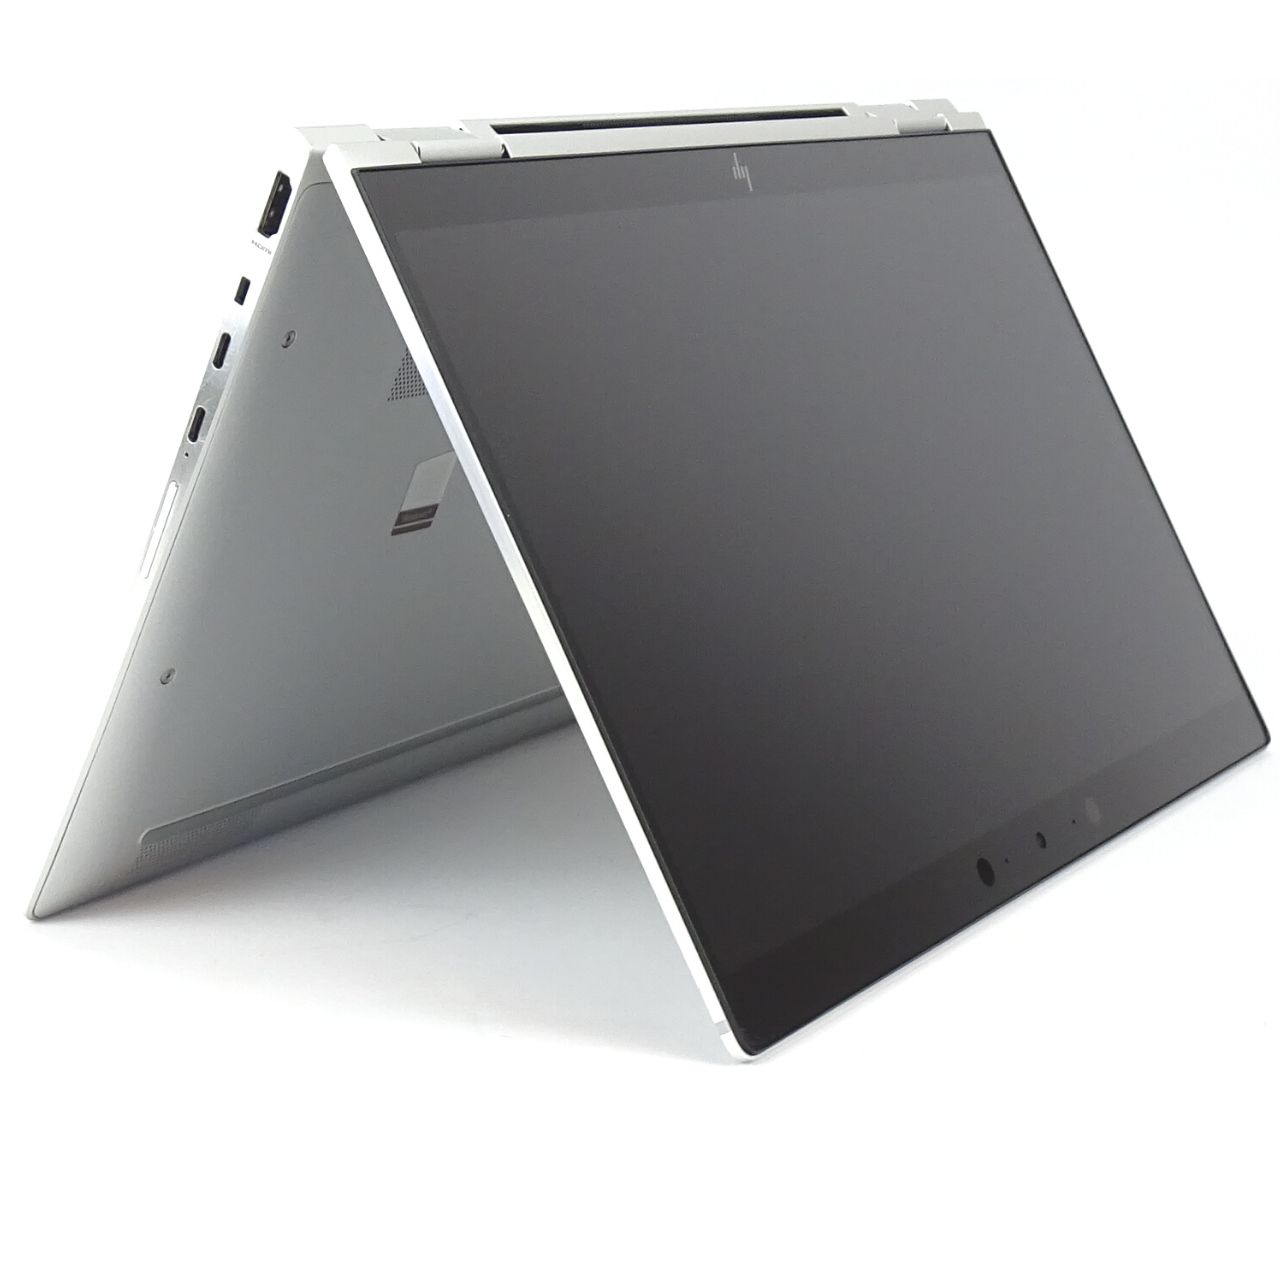 HP EliteBook x360 1030 G3 

 - 13,3 Zoll - Intel Core i7 8650U @ 1,9 GHz - 8 GB - 256 GB SSD - 1920 x 1080 FHD - Touchscreen - Windows 10 Professional - Sehr gut